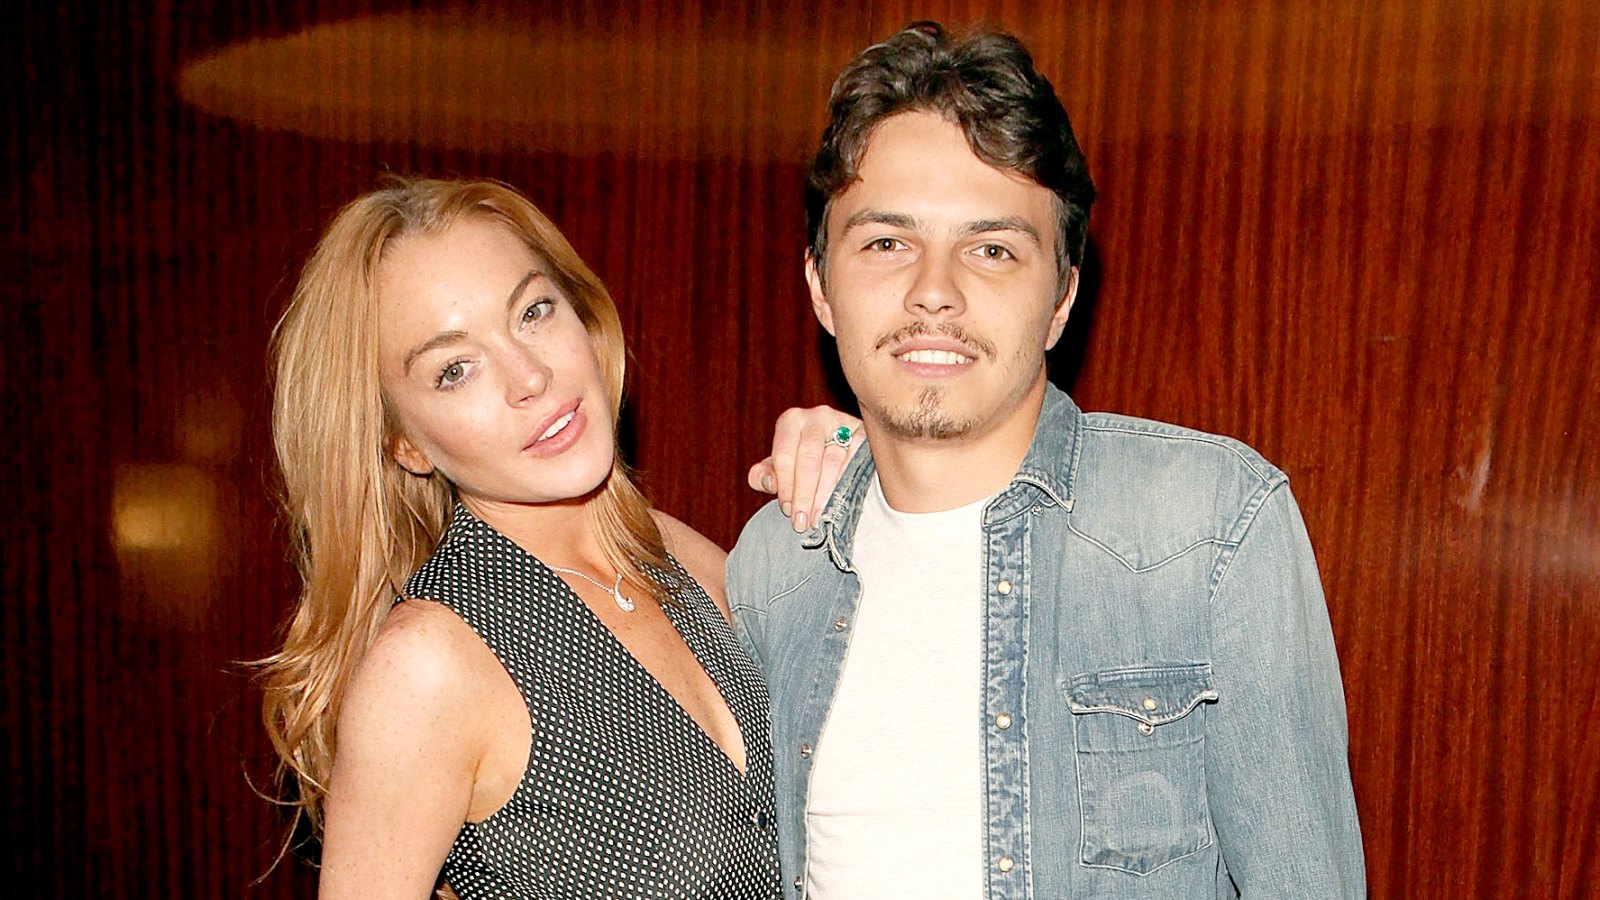 Lindsay Lohan and Egor Tarabasov abuse claim